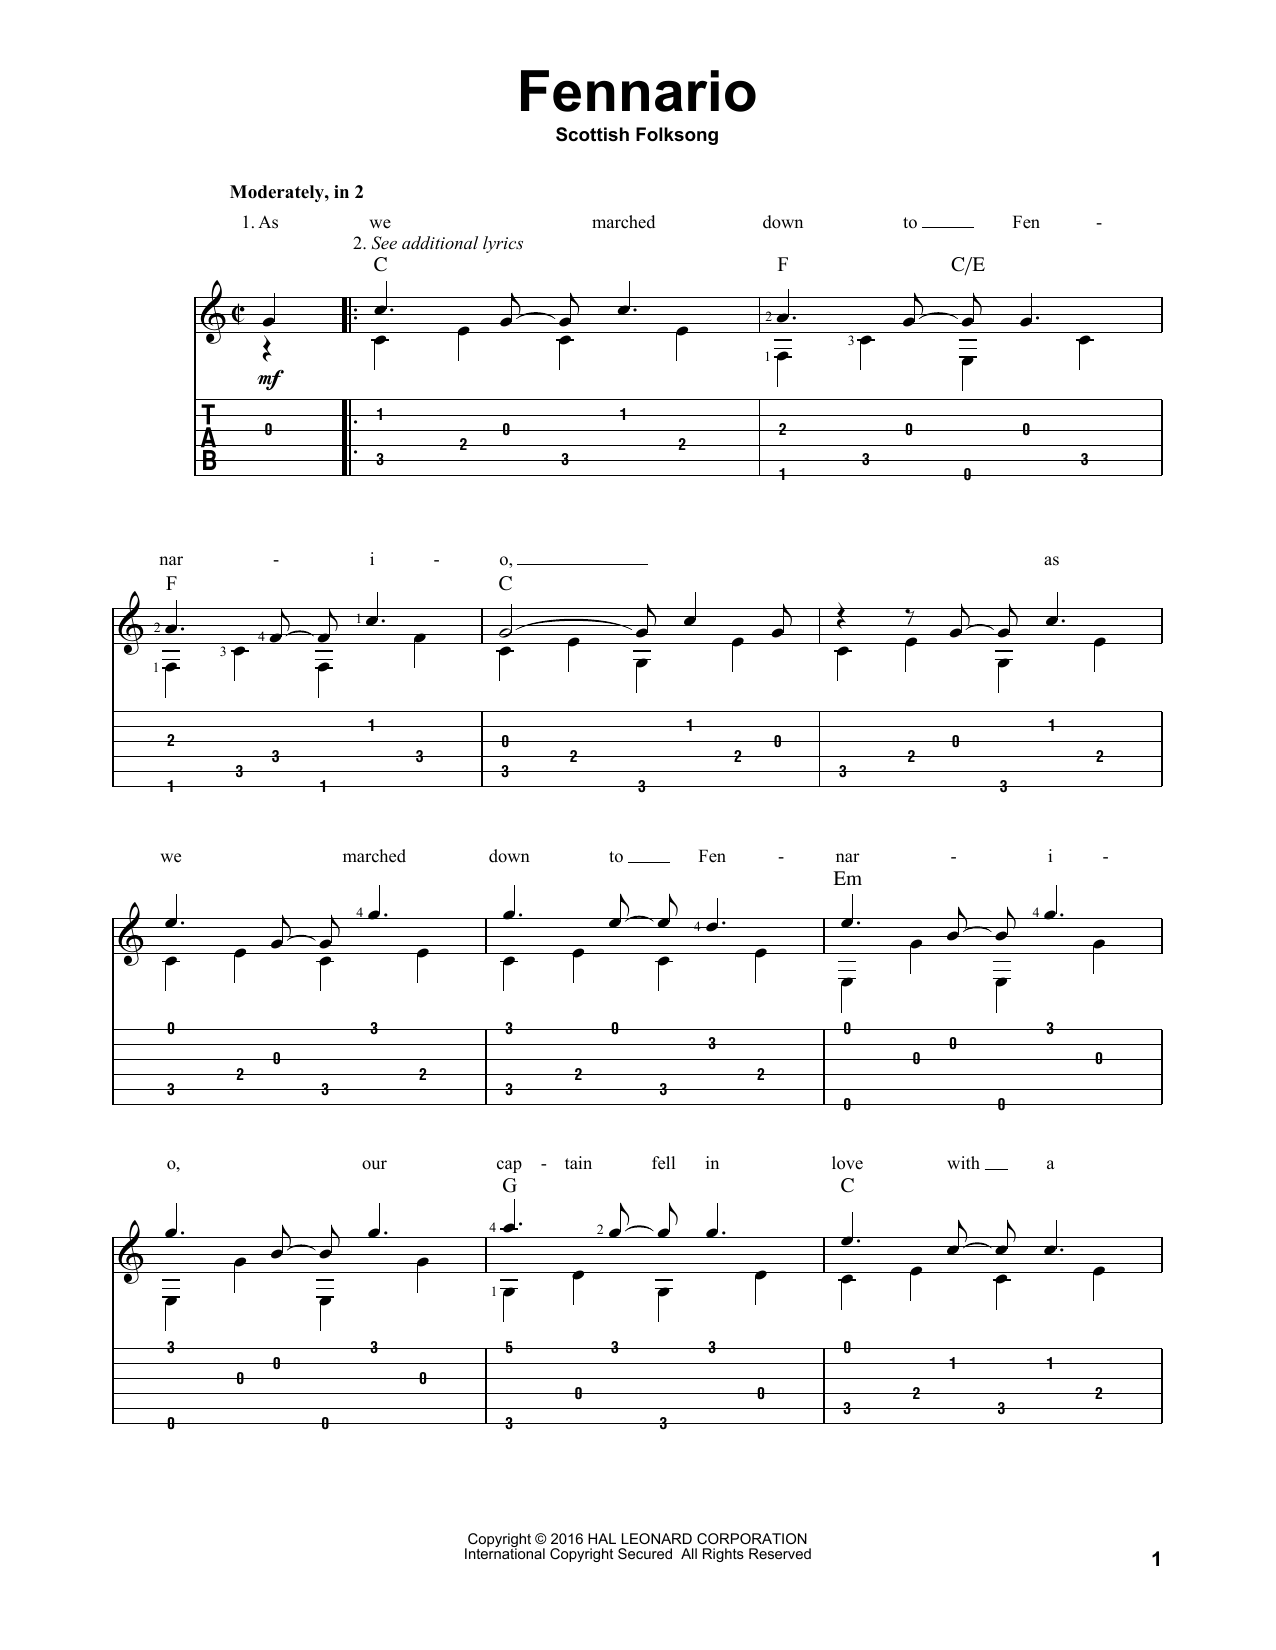 Scottish Folksong Fennario Sheet Music Notes & Chords for Guitar Tab - Download or Print PDF